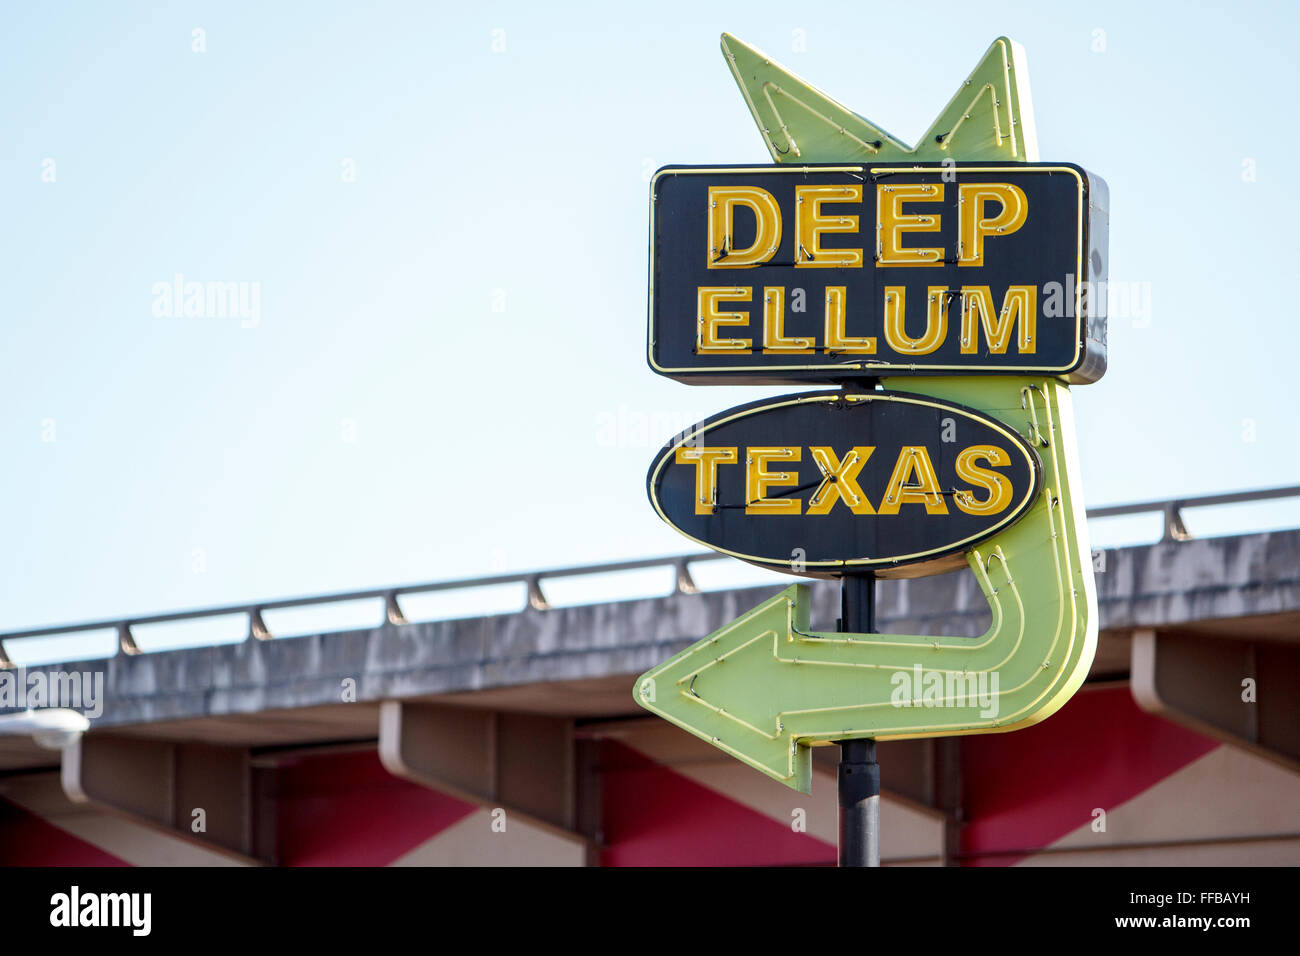 Dallas Deep Ellum Texas sign Stock Photo